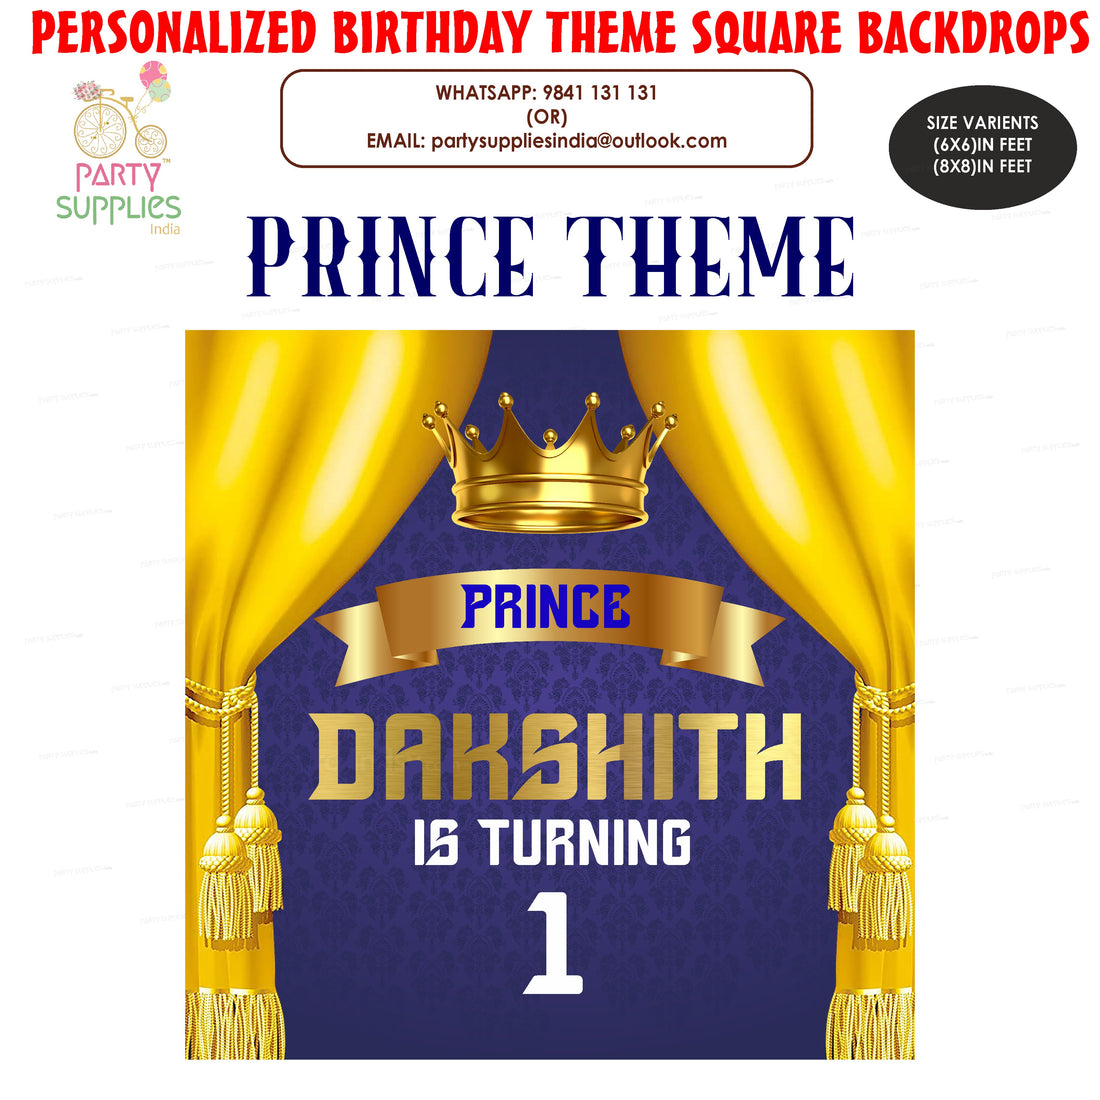 Prince Theme Square Backdrop